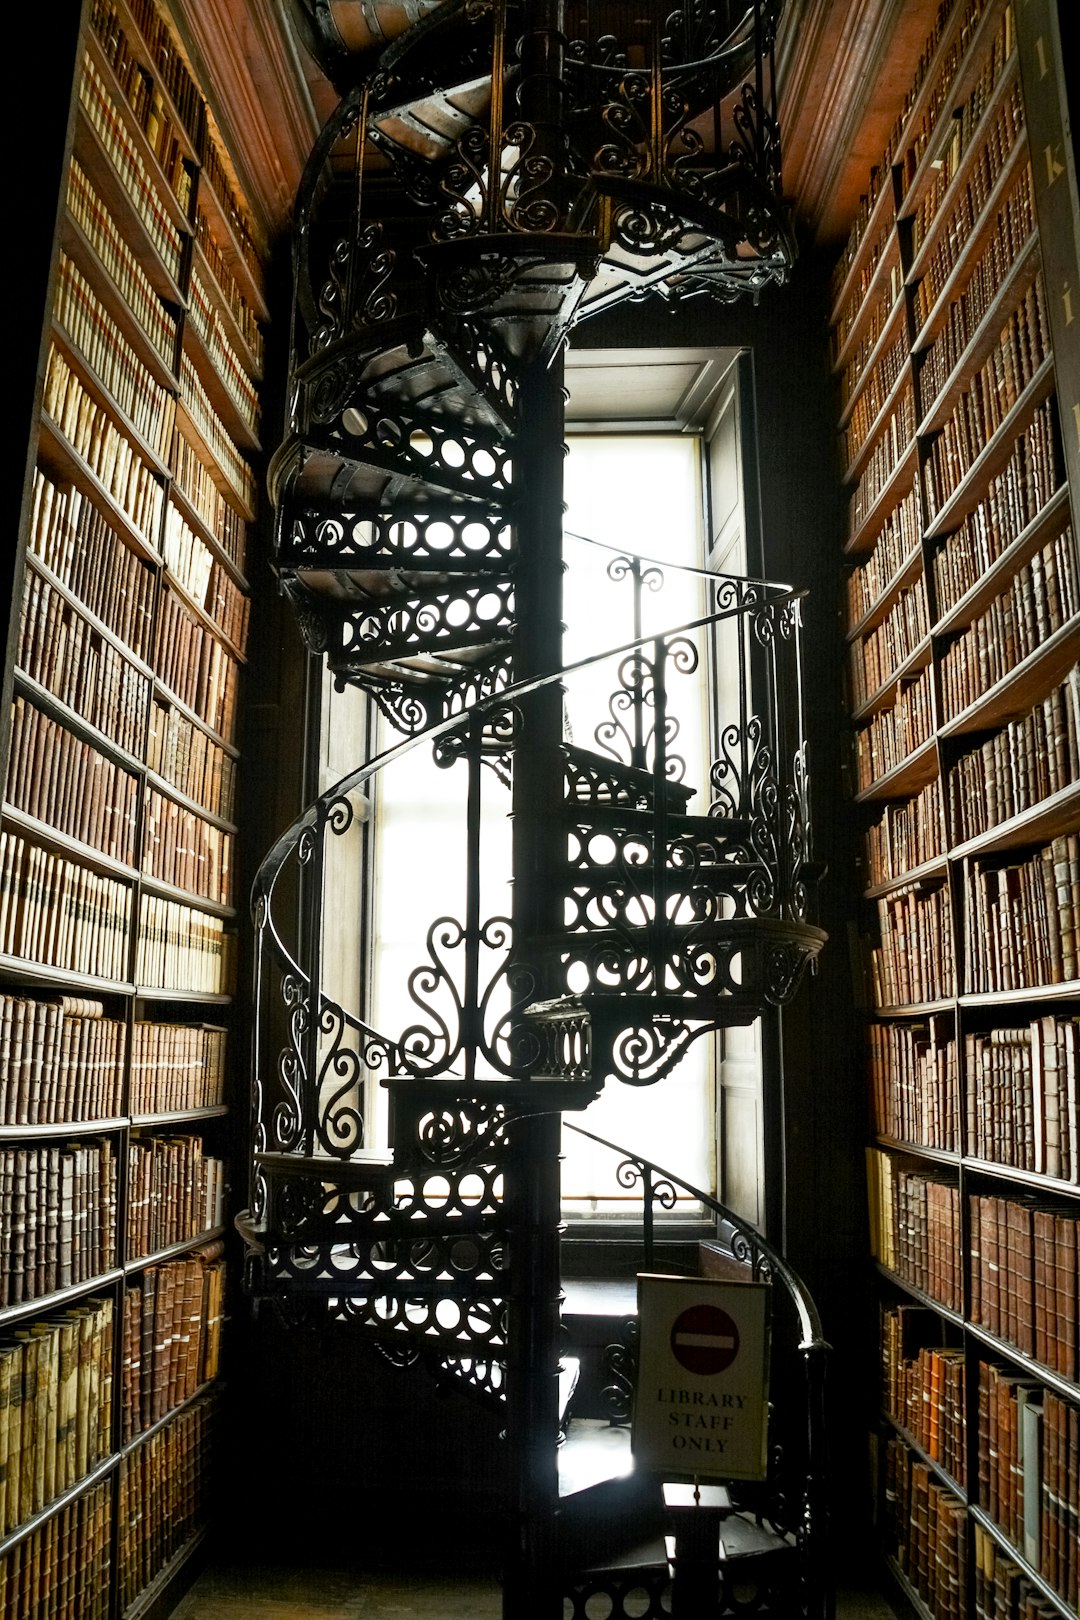 black metal spiral staircase near brown wooden book shelves